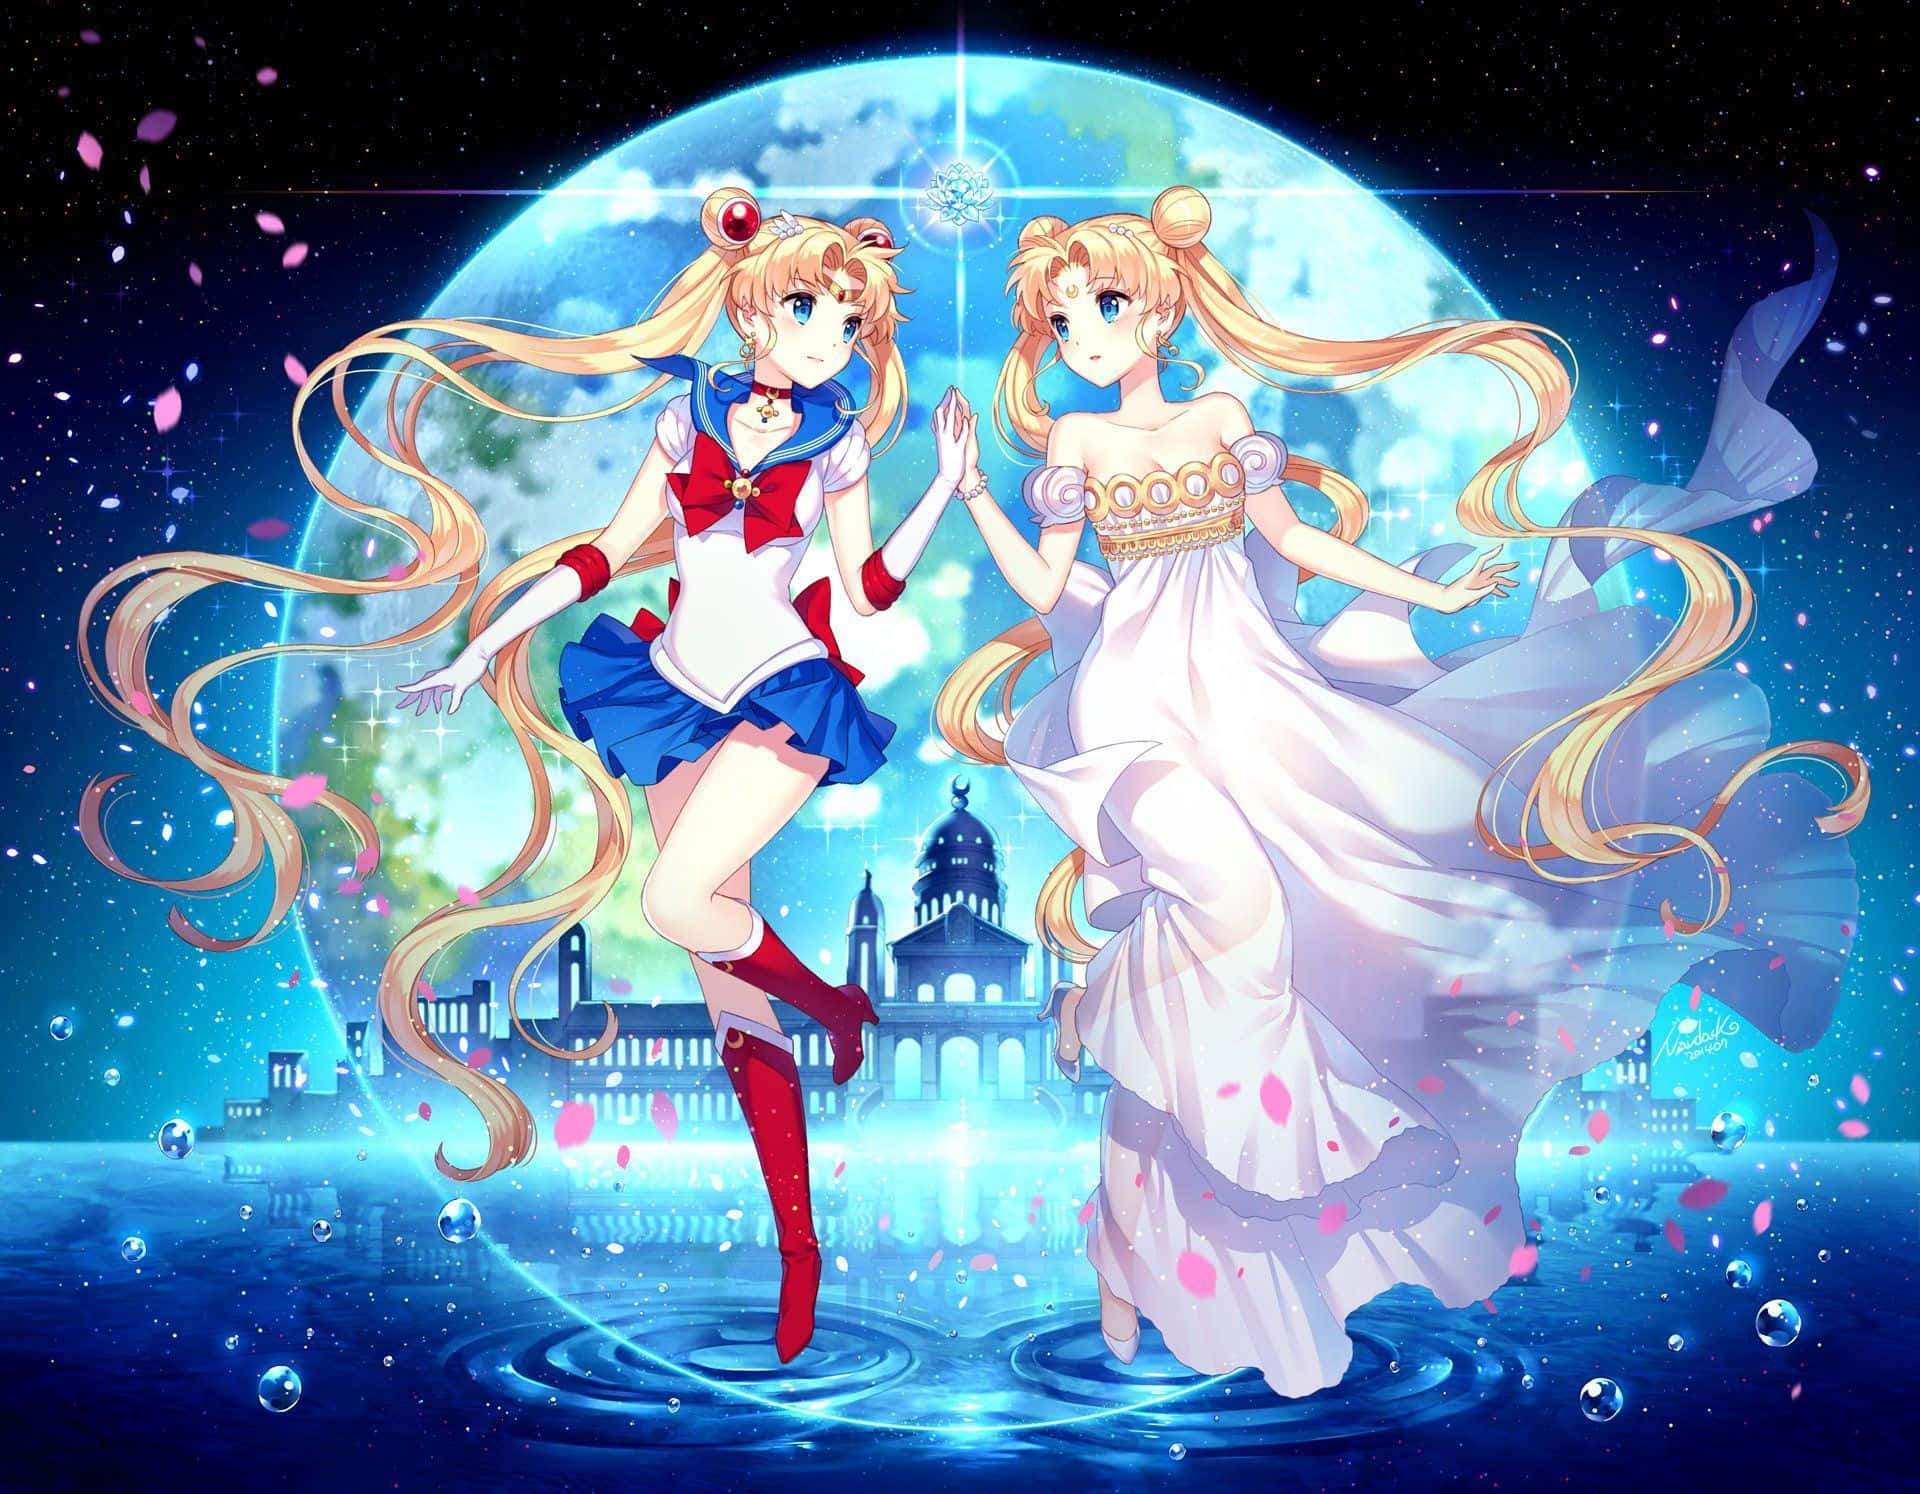 Aesthetically Appealing Sailor Moon Wallpaper